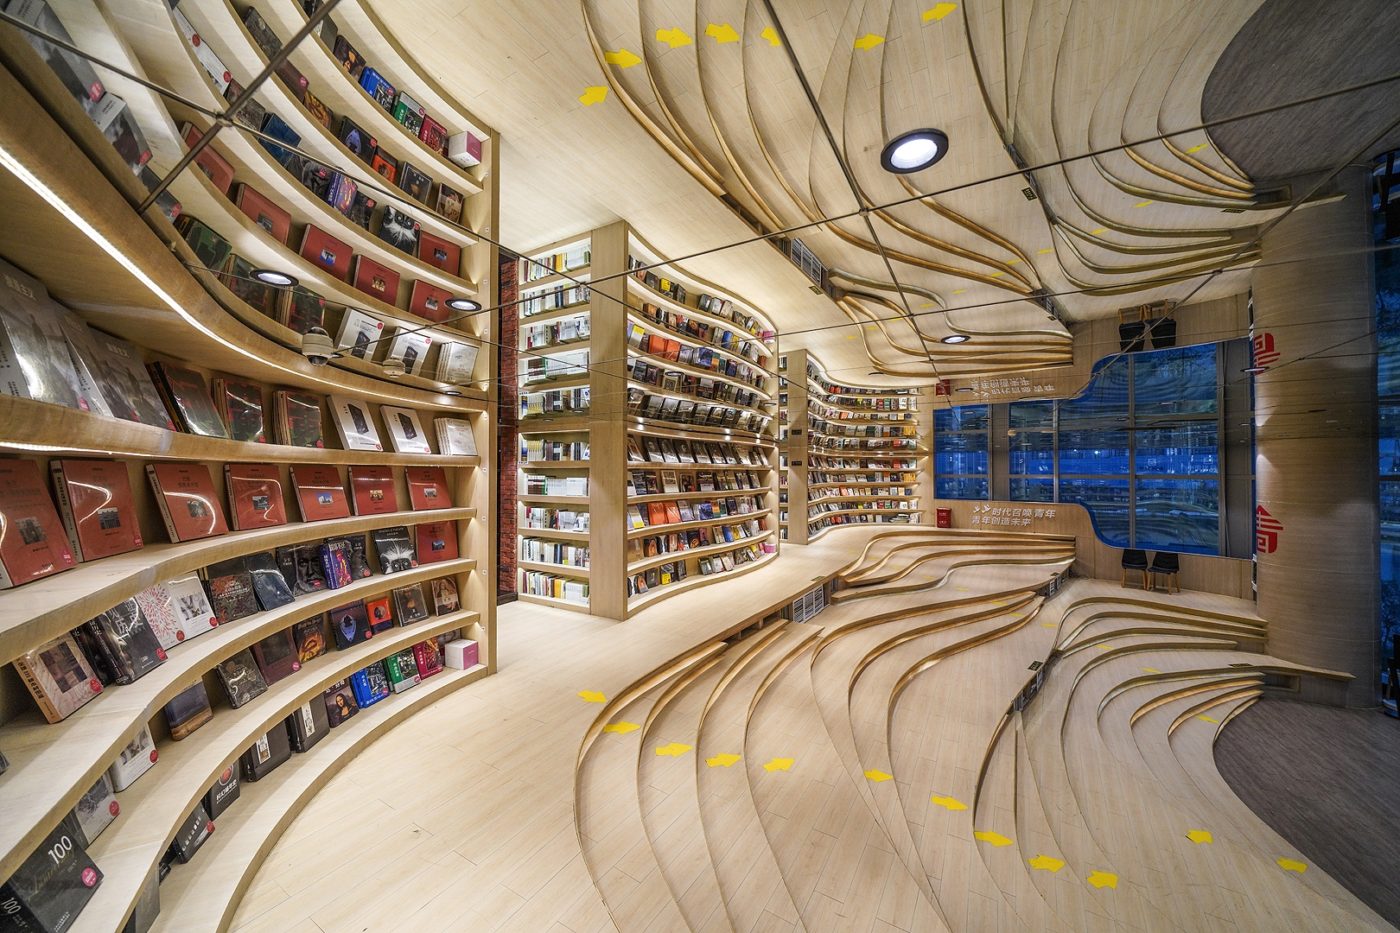 The Most Beautiful Bookstore In China by Chin-Fa Tzeng